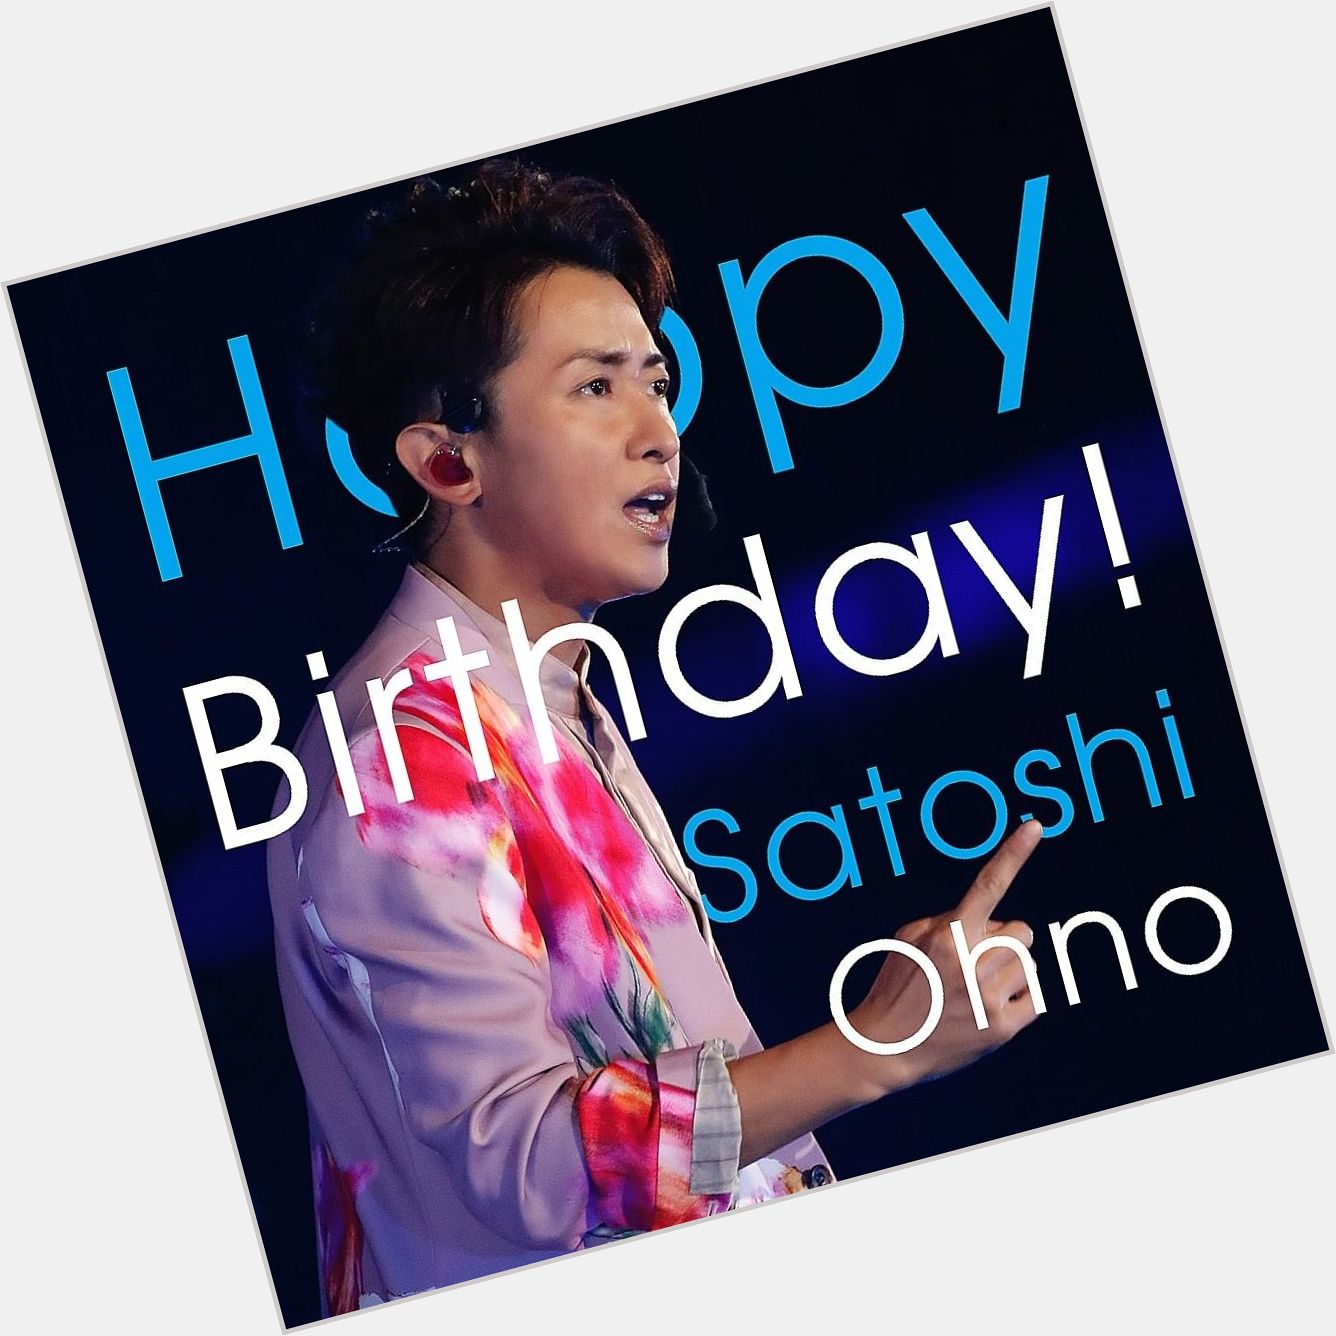 201126 ARASHI Instagram Happy  Birthday  to  you   40th  satoshi ohno  1980,11,26 